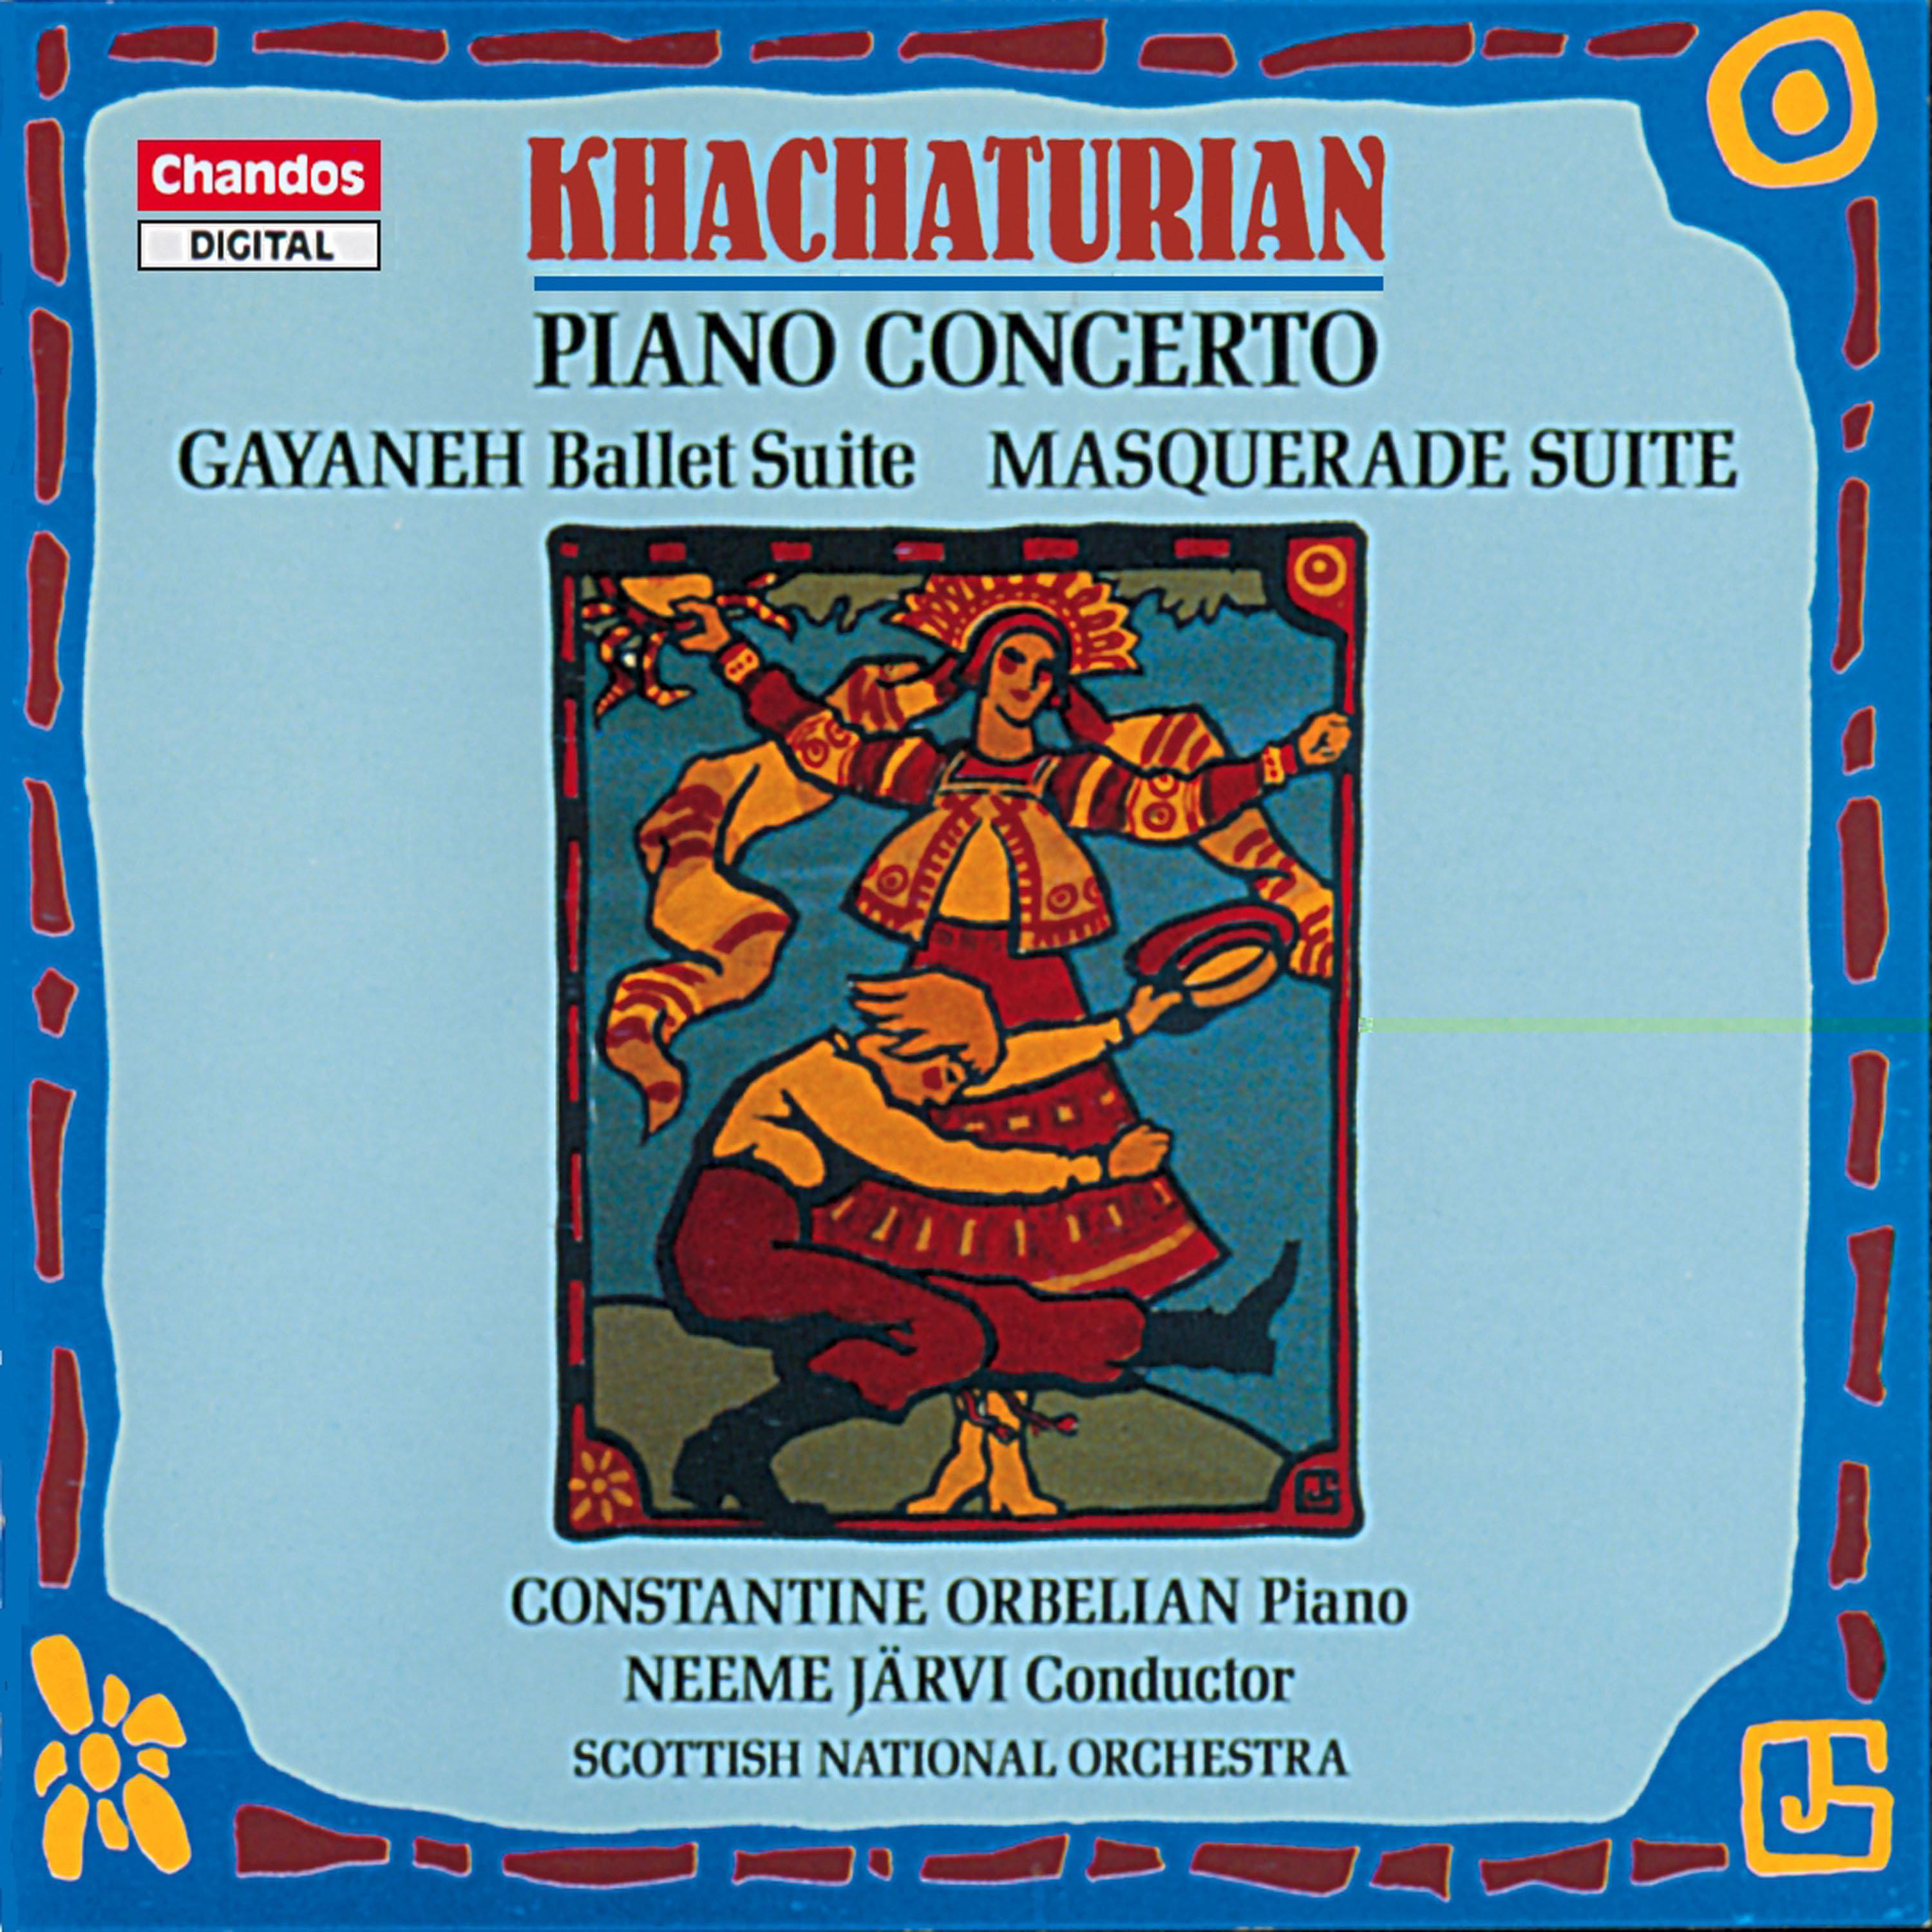 Khachaturian - Piano Concerto, Gayaneh, Masquerade